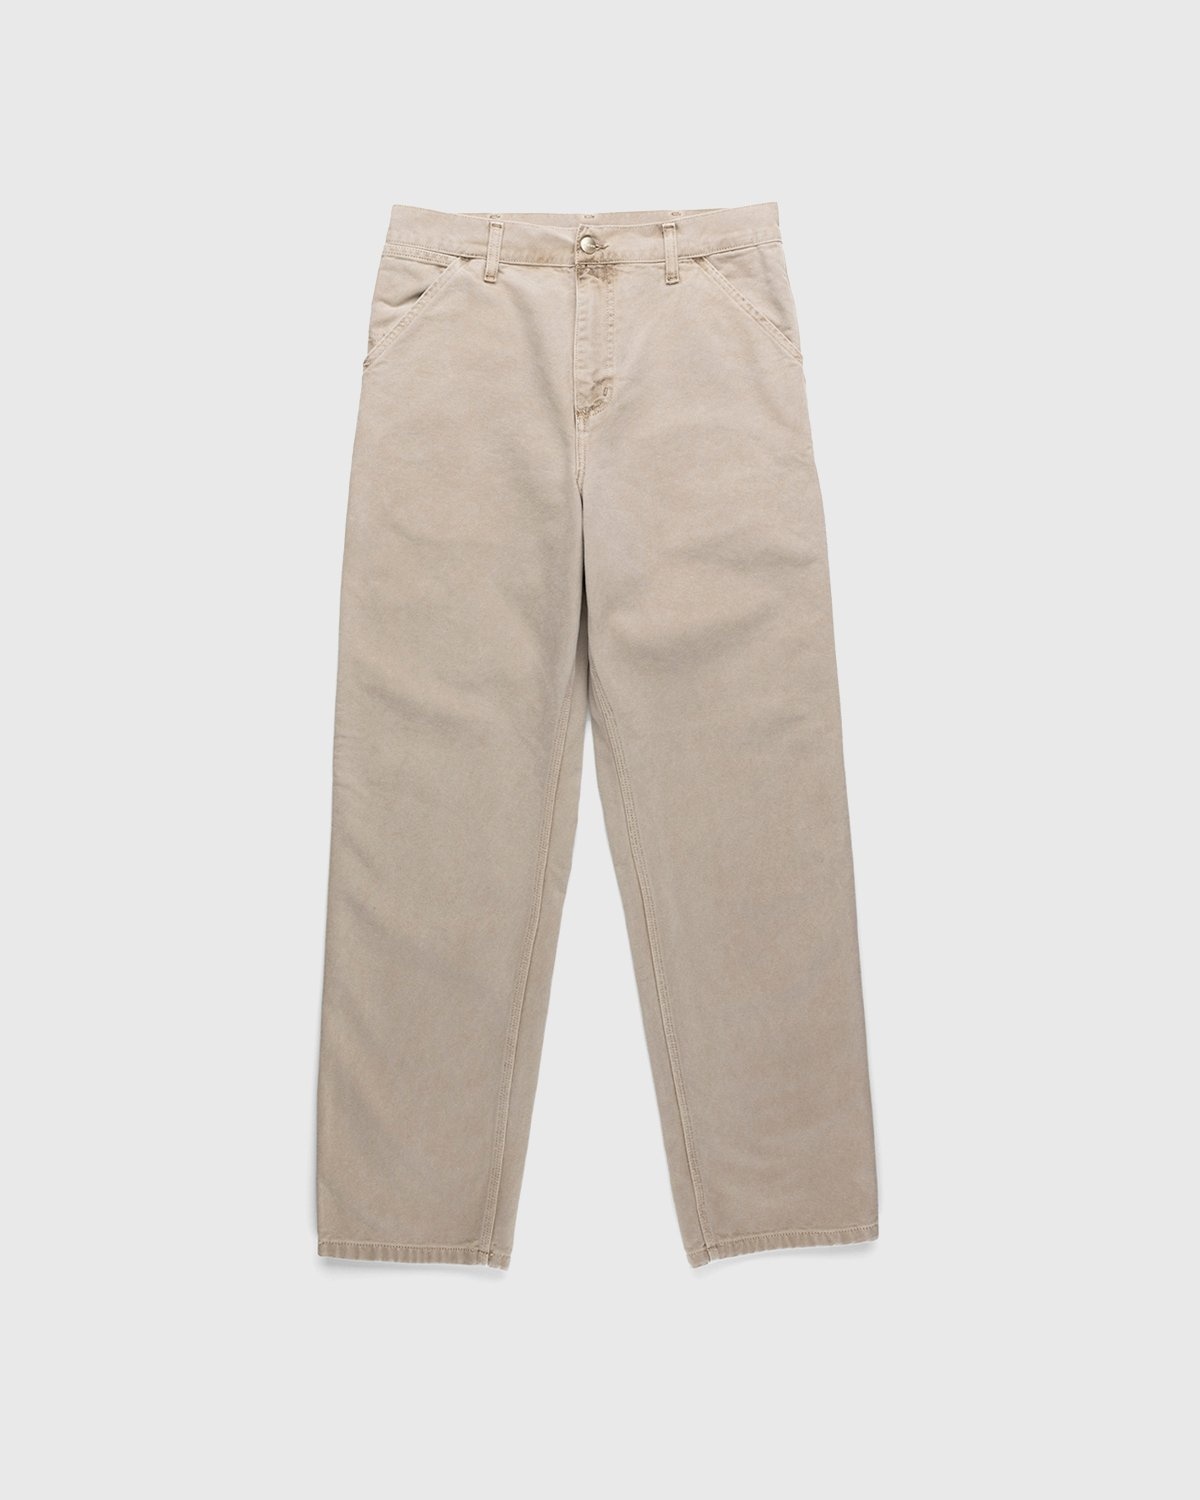 Carhartt WIP – Single Knee Pant Dusty Hamilton Brown Faded - Trousers - Beige - Image 1